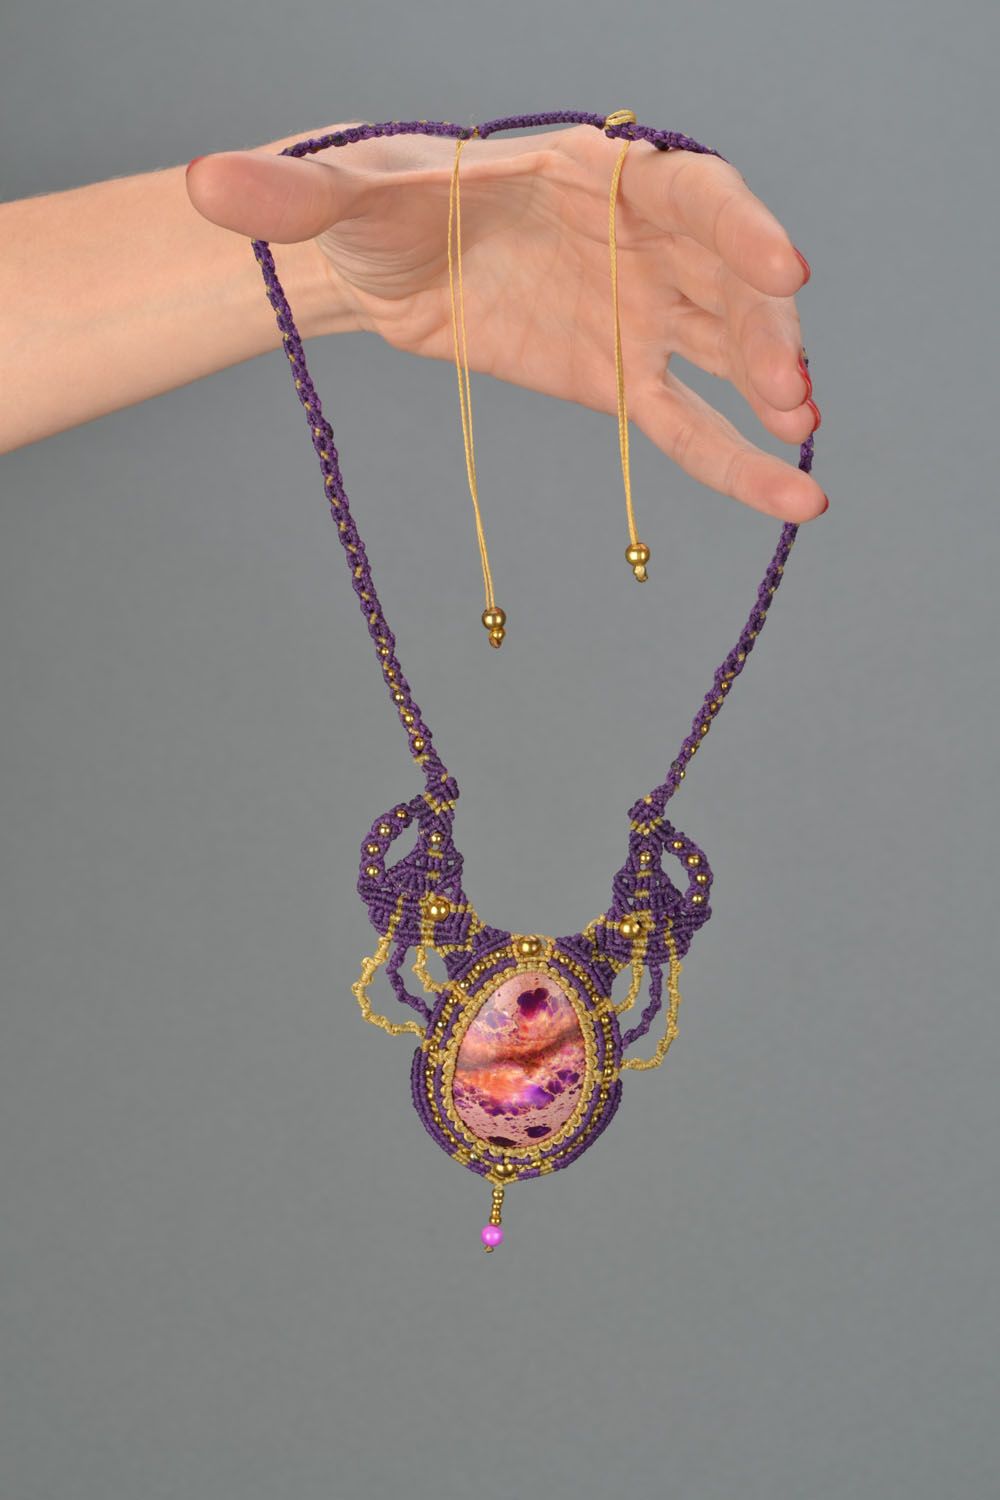 Macrame necklace with variscite gemstone photo 2